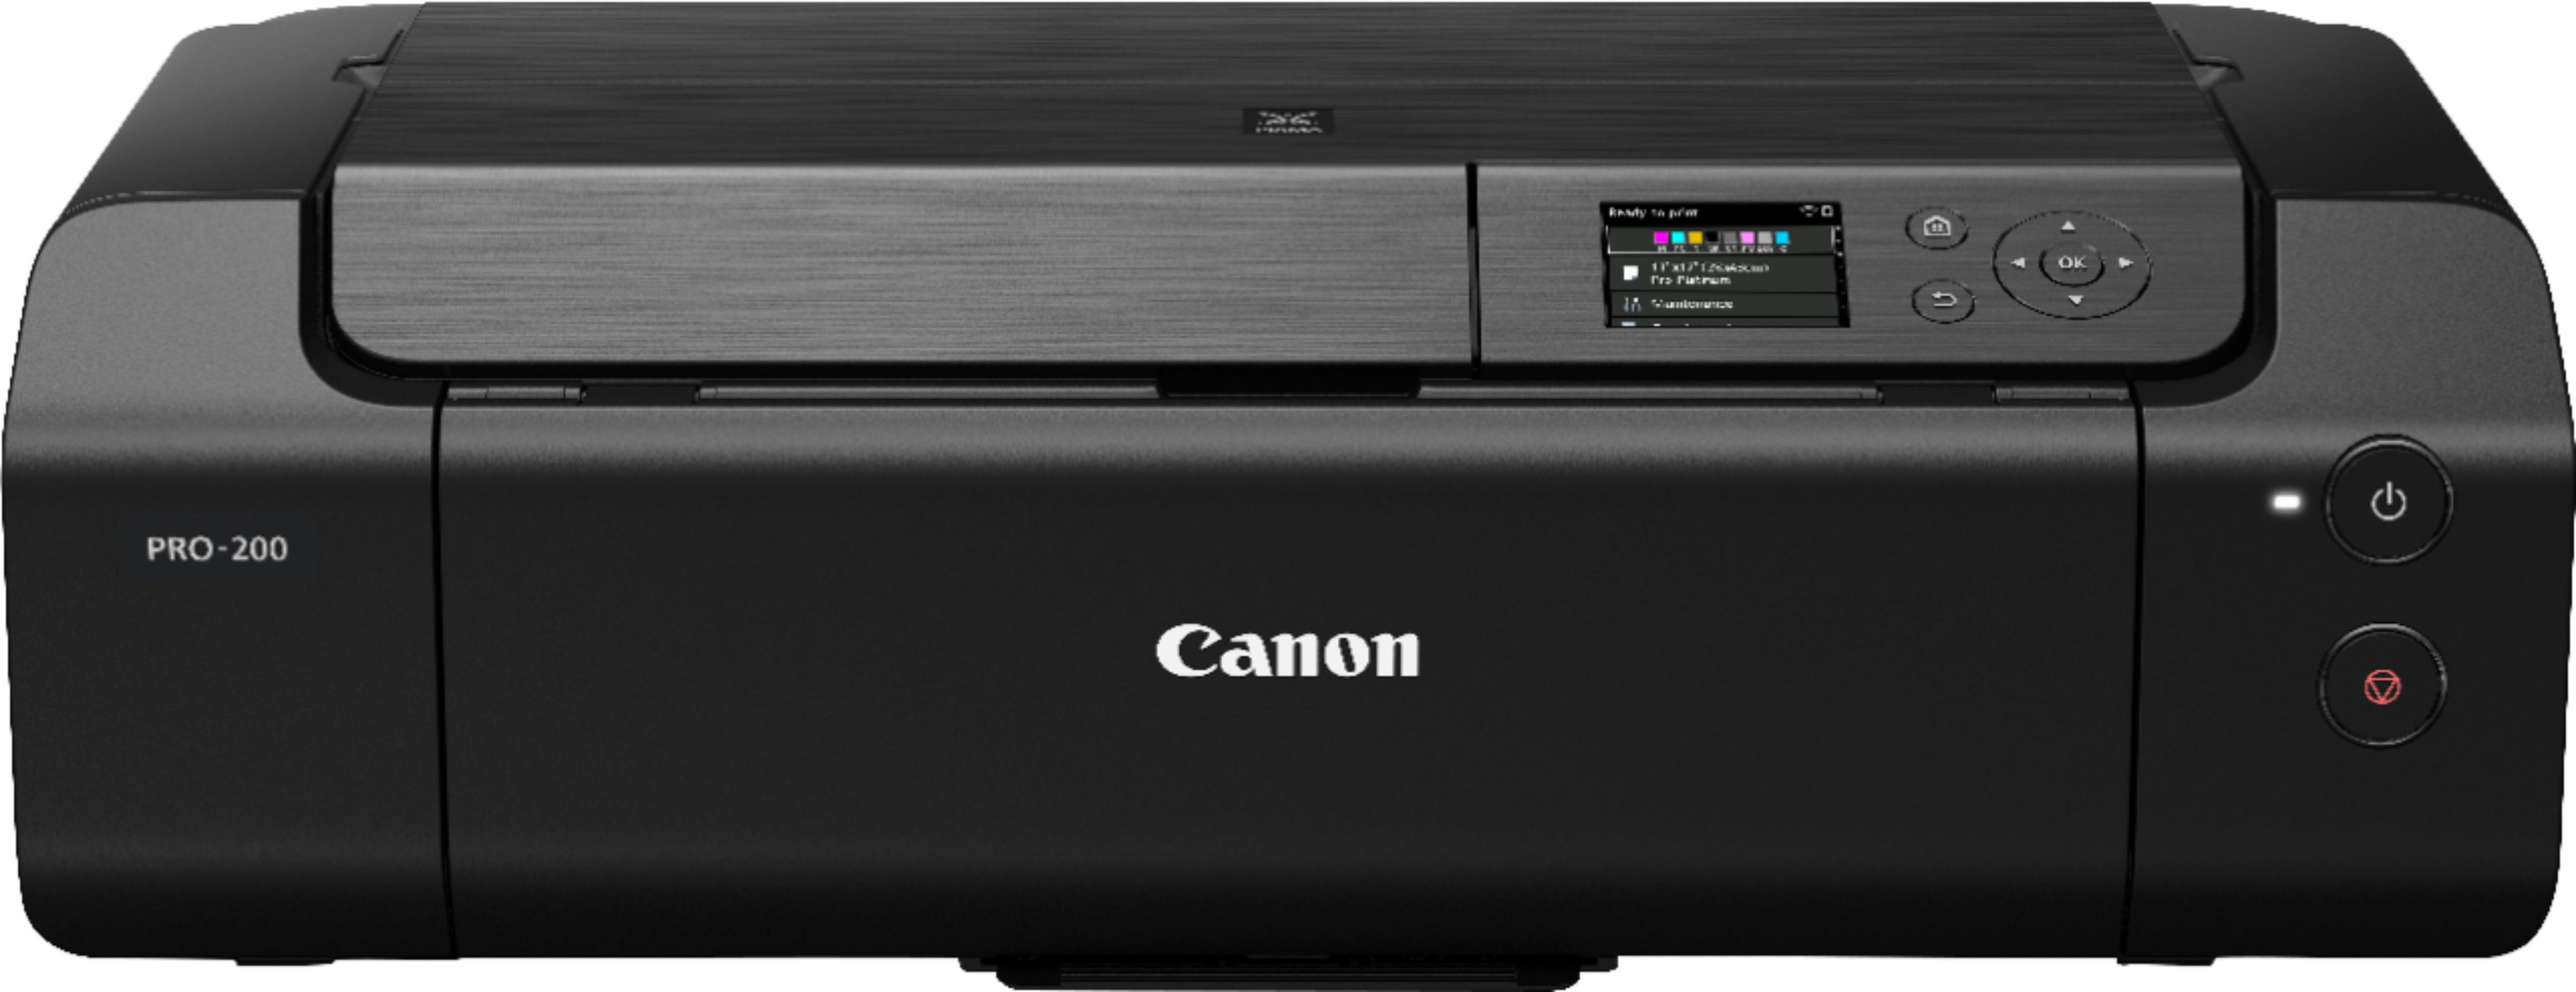 Canon Pixma iP8720 Wireless Inkjet Photo Printer Review